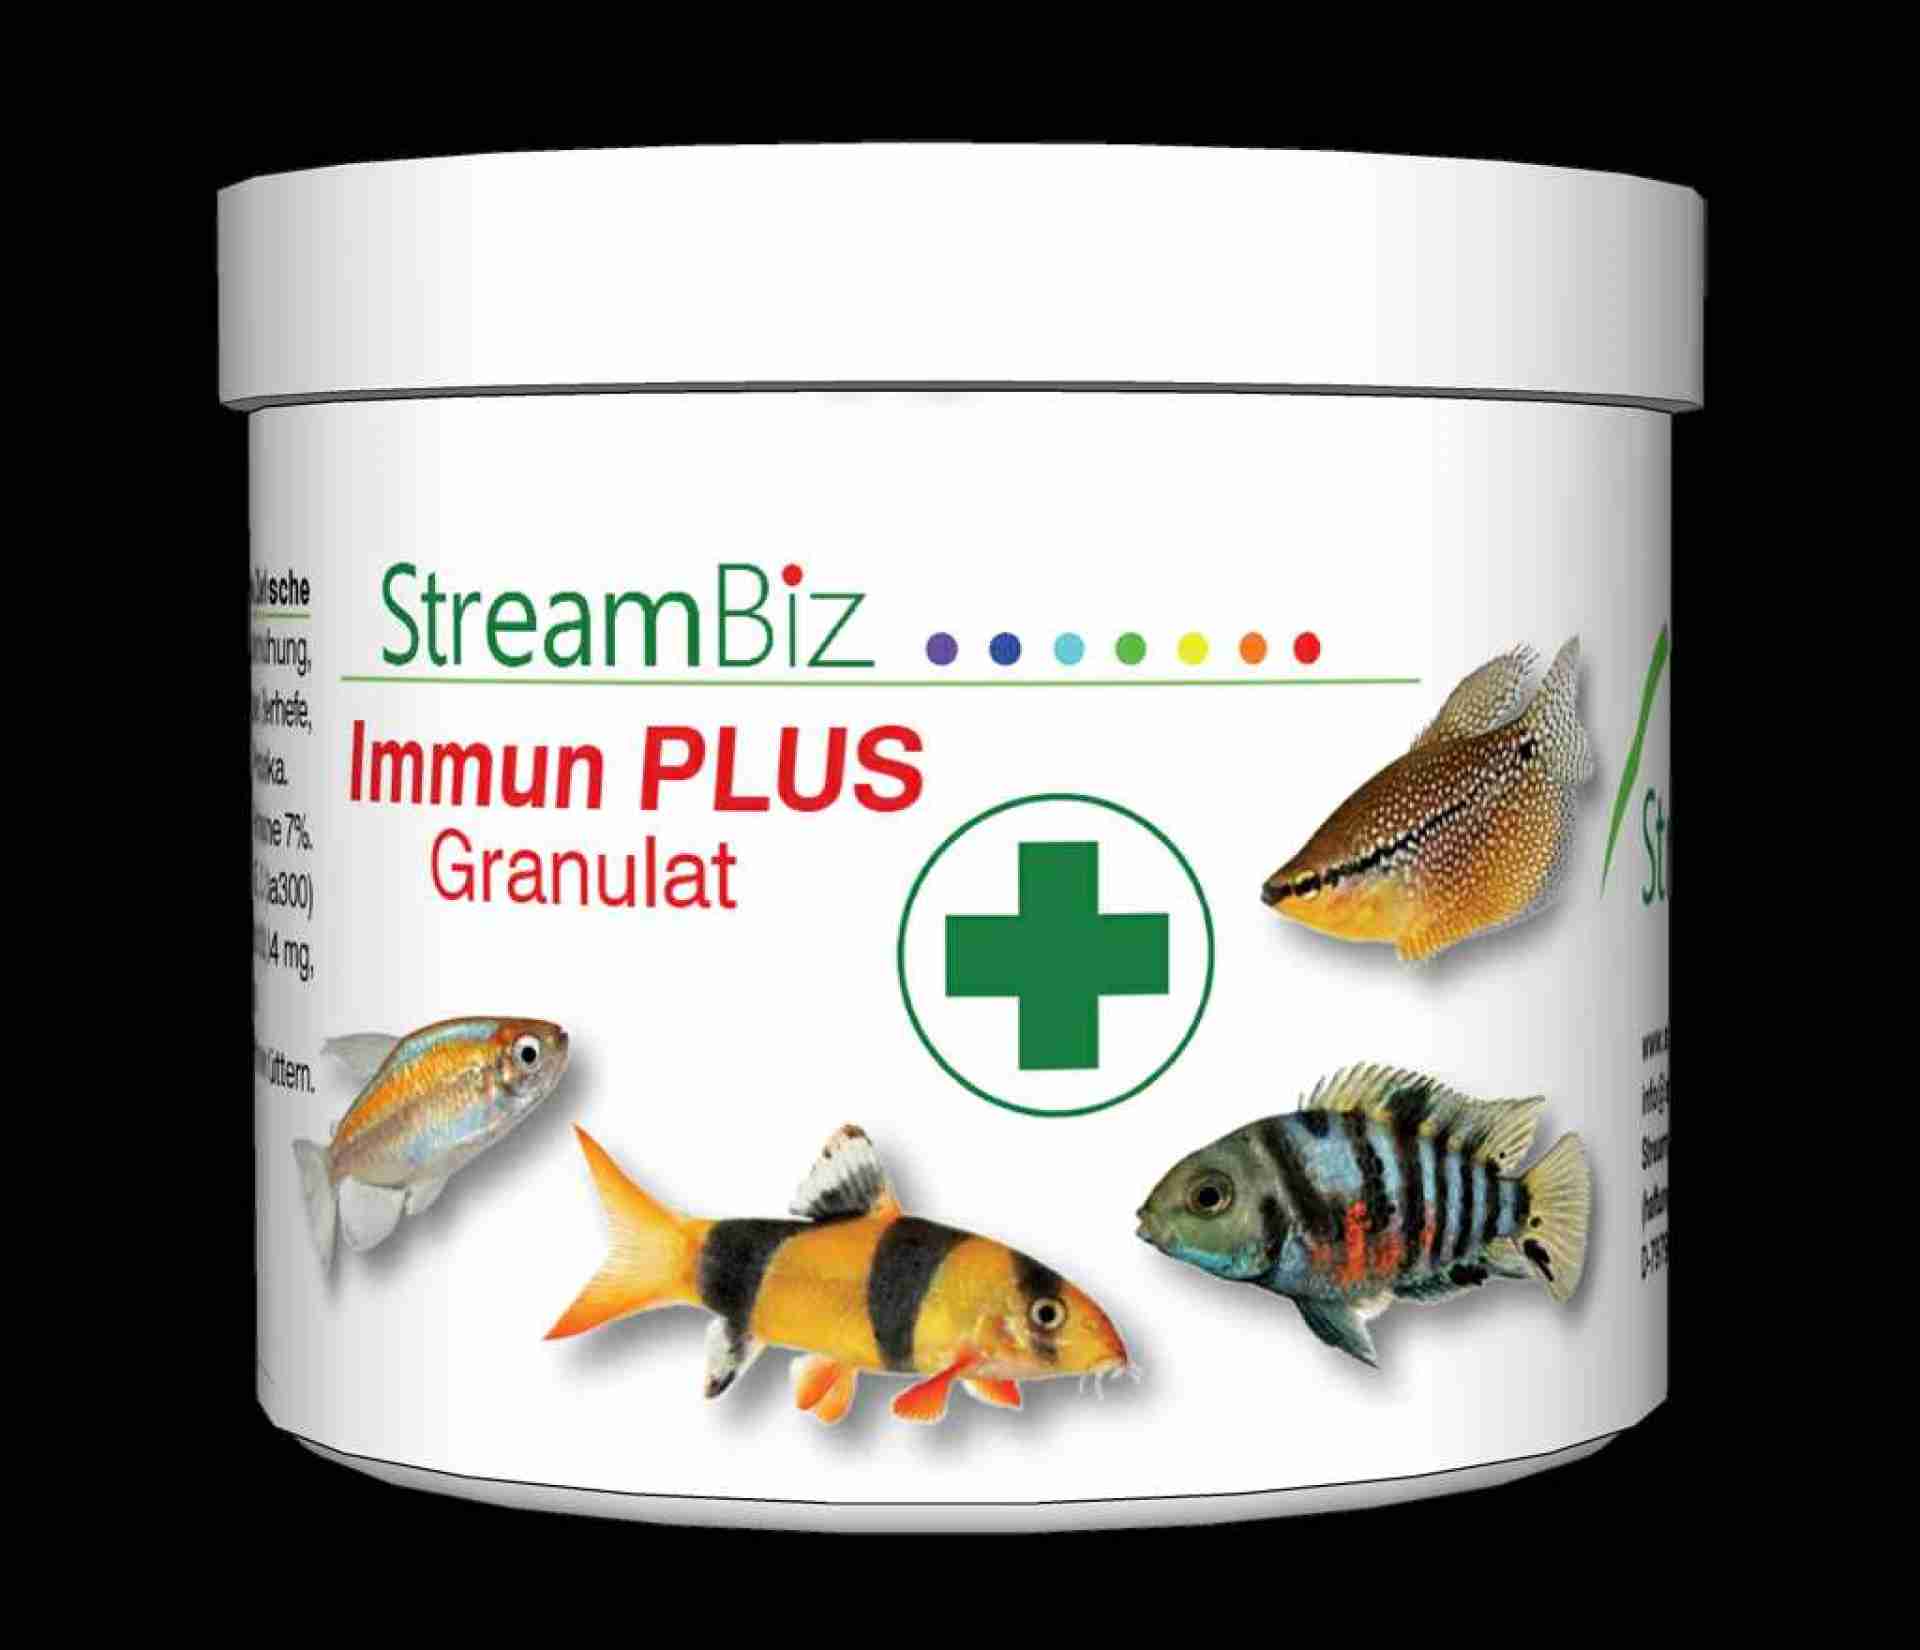 Immun Plus - granulat | StreamBiz